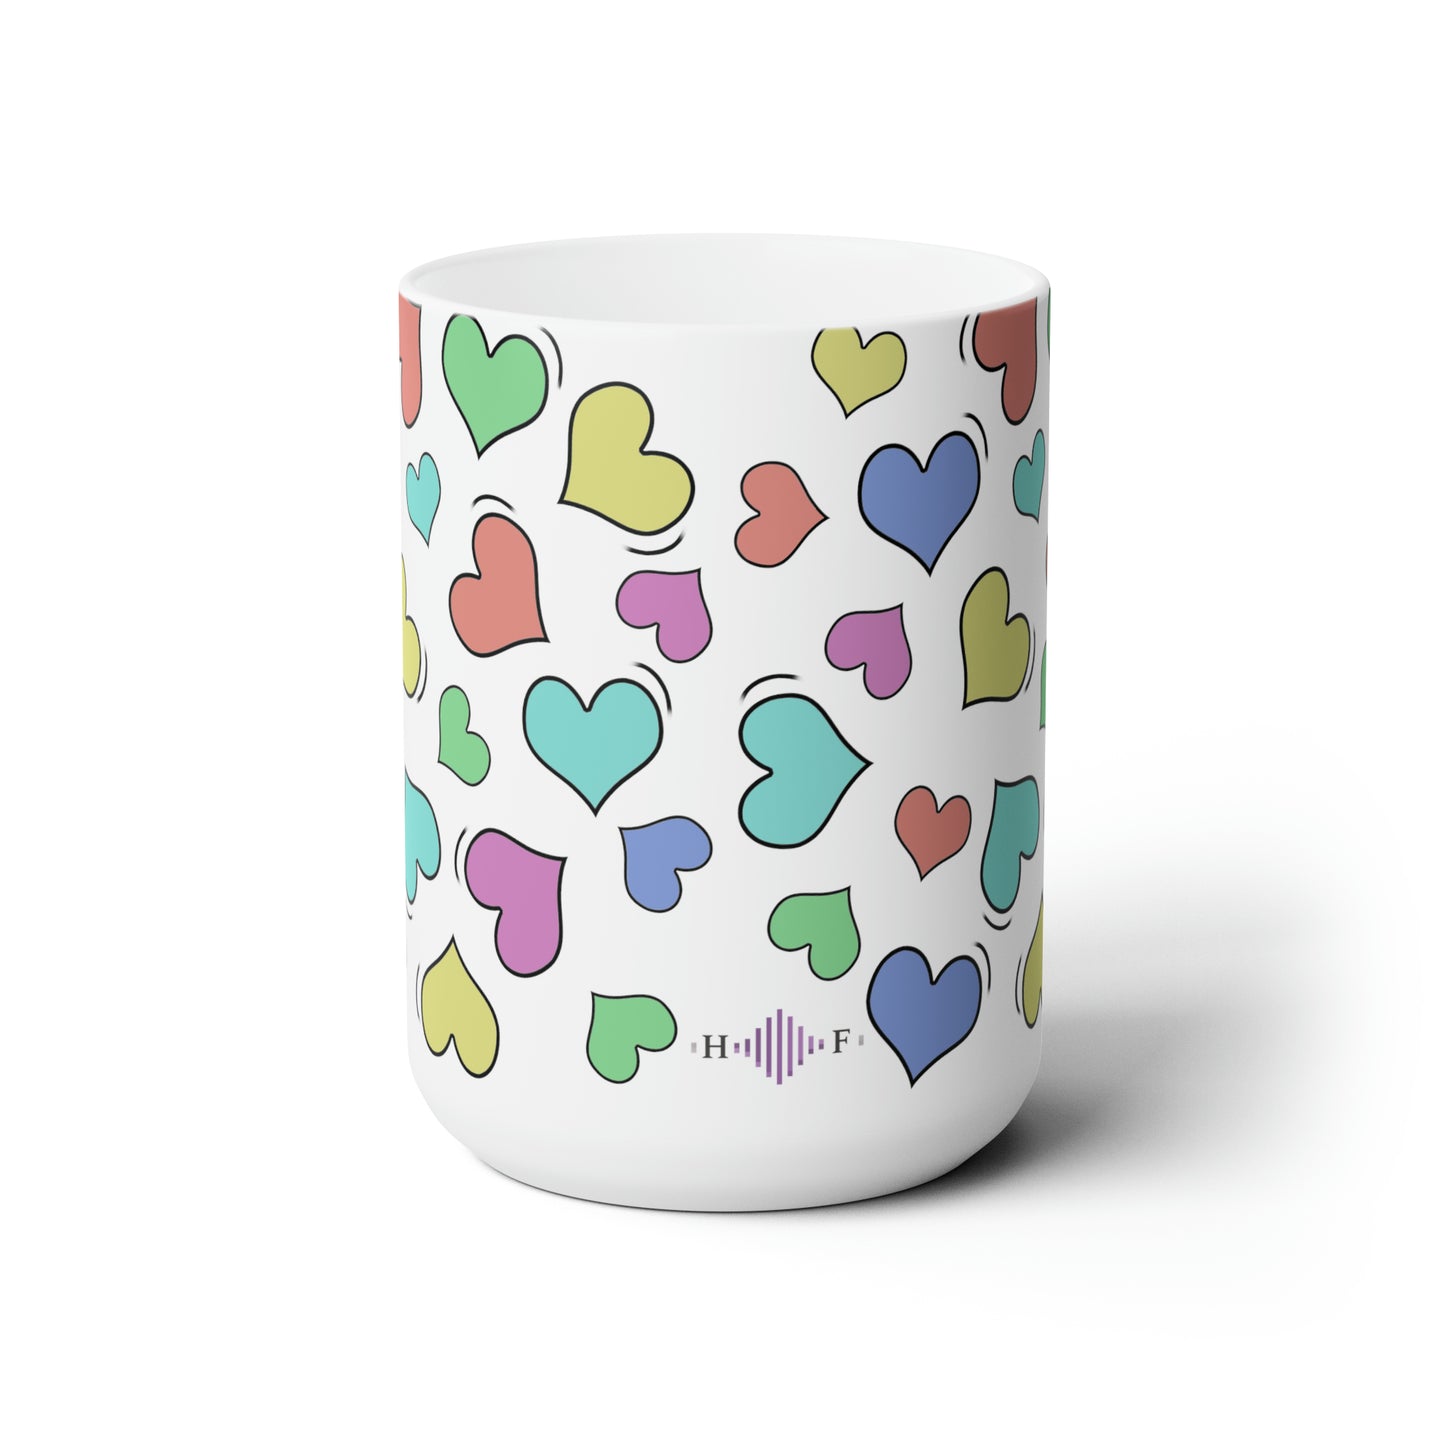 Sweetie Hearts - Ceramic Mug 15oz